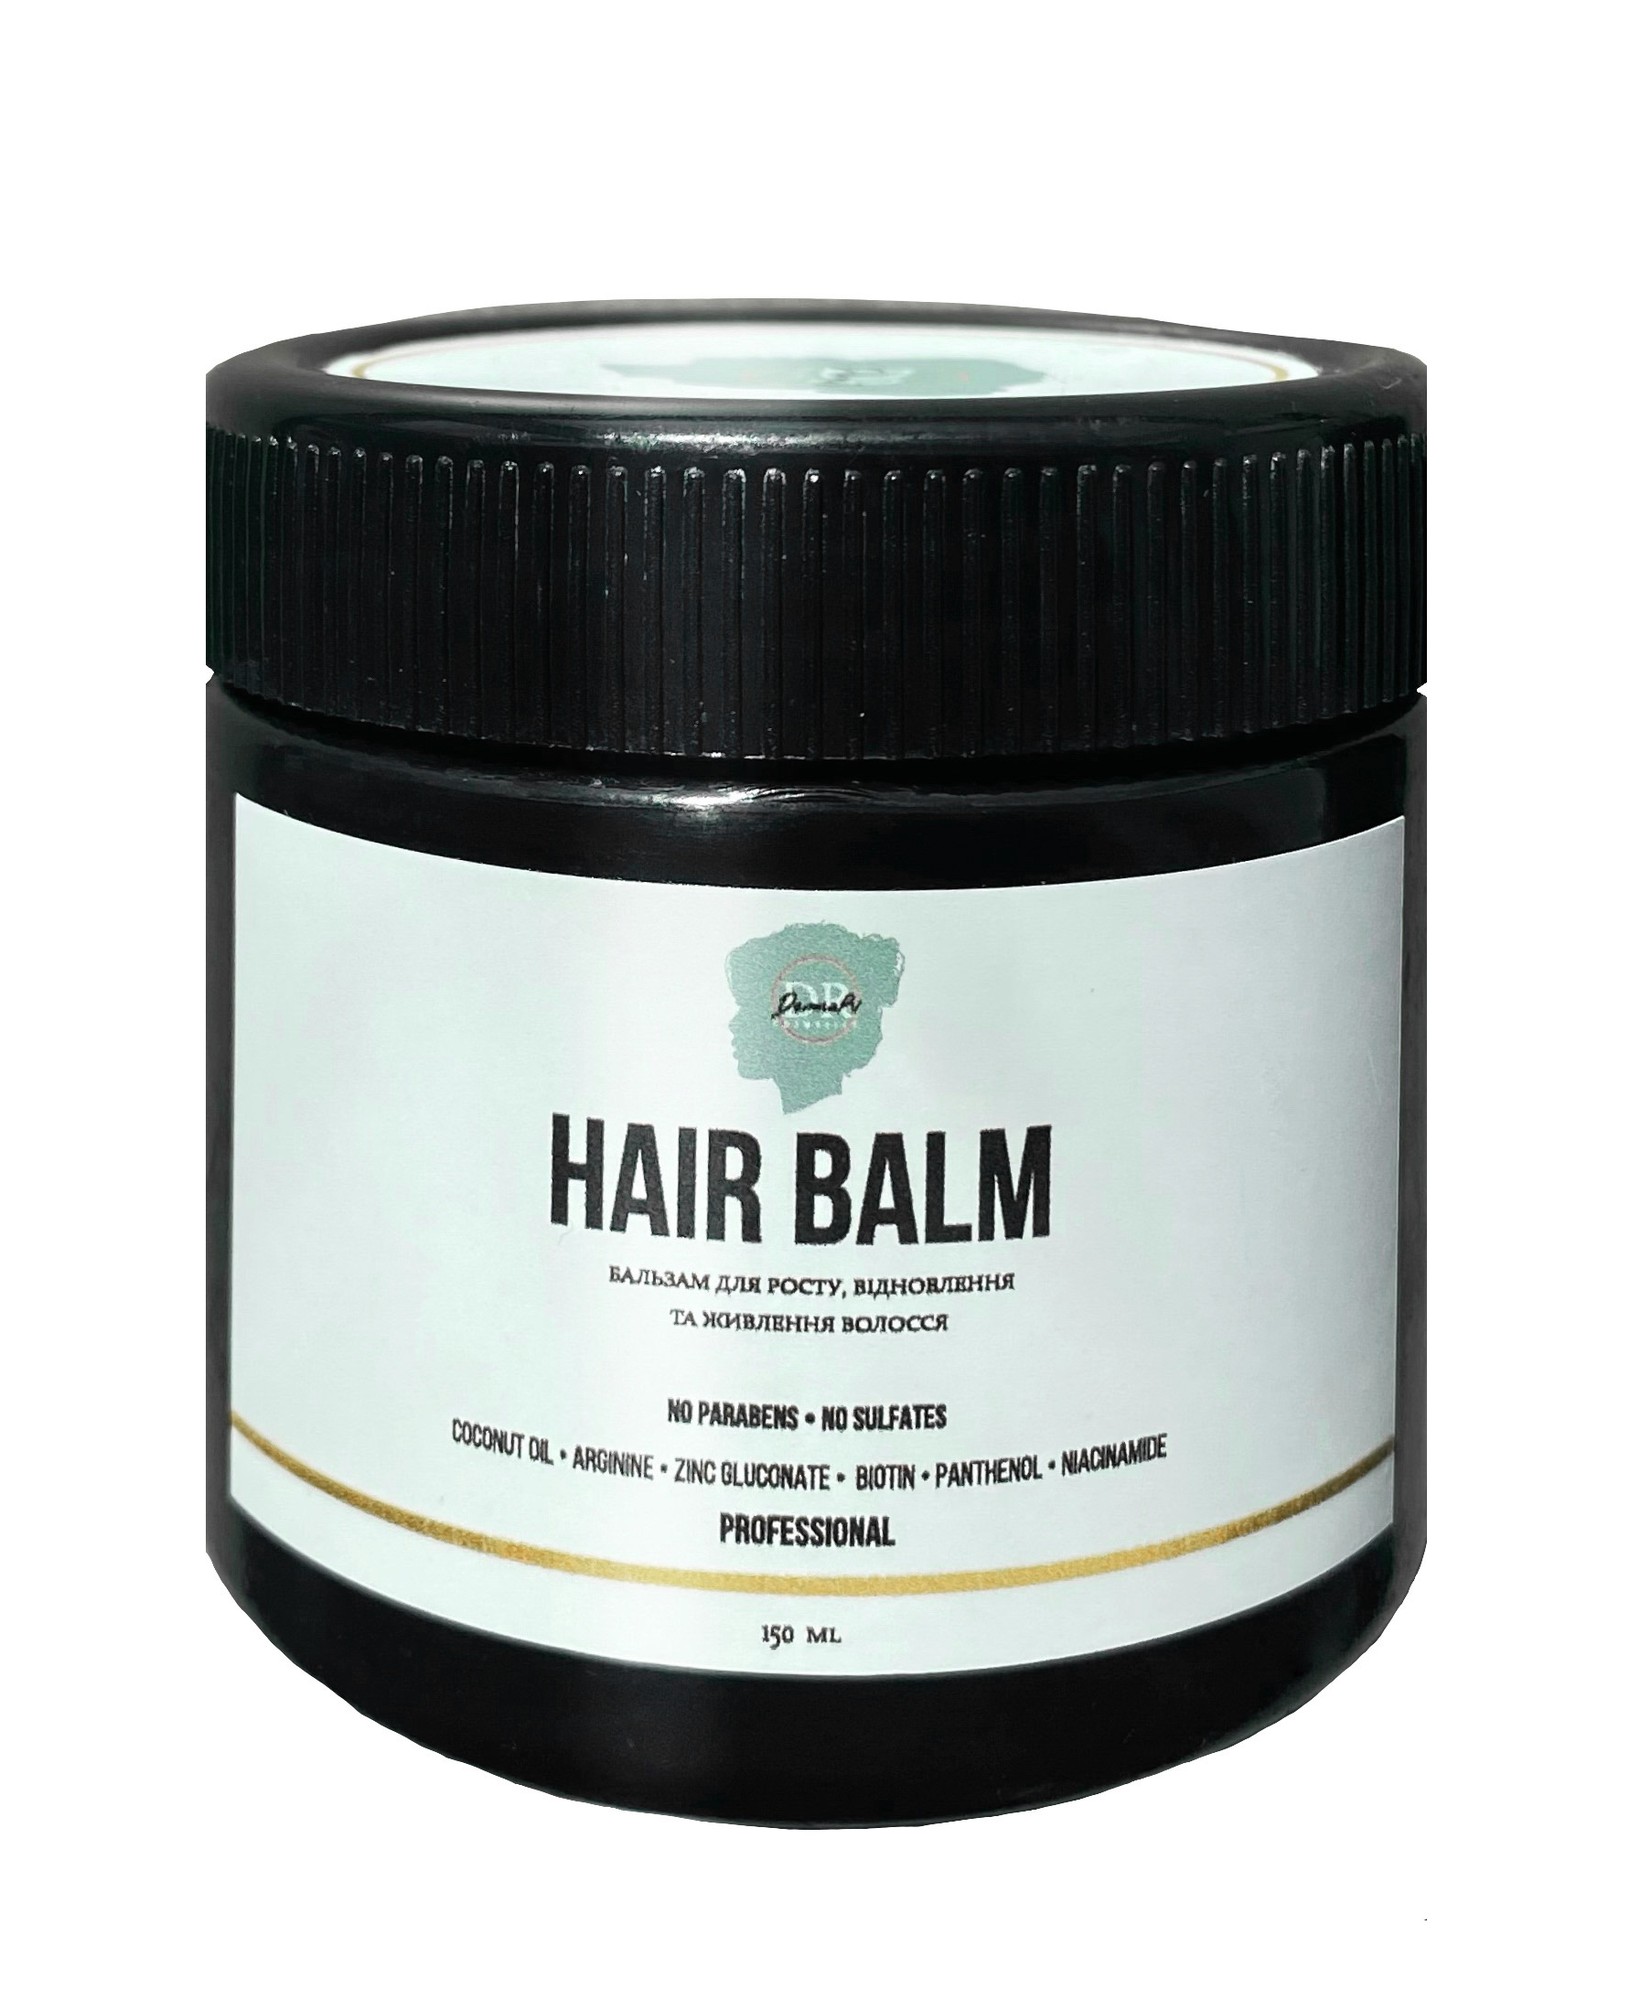 HAIR BALM for hair growth, restoration and nutrition, 150 ml